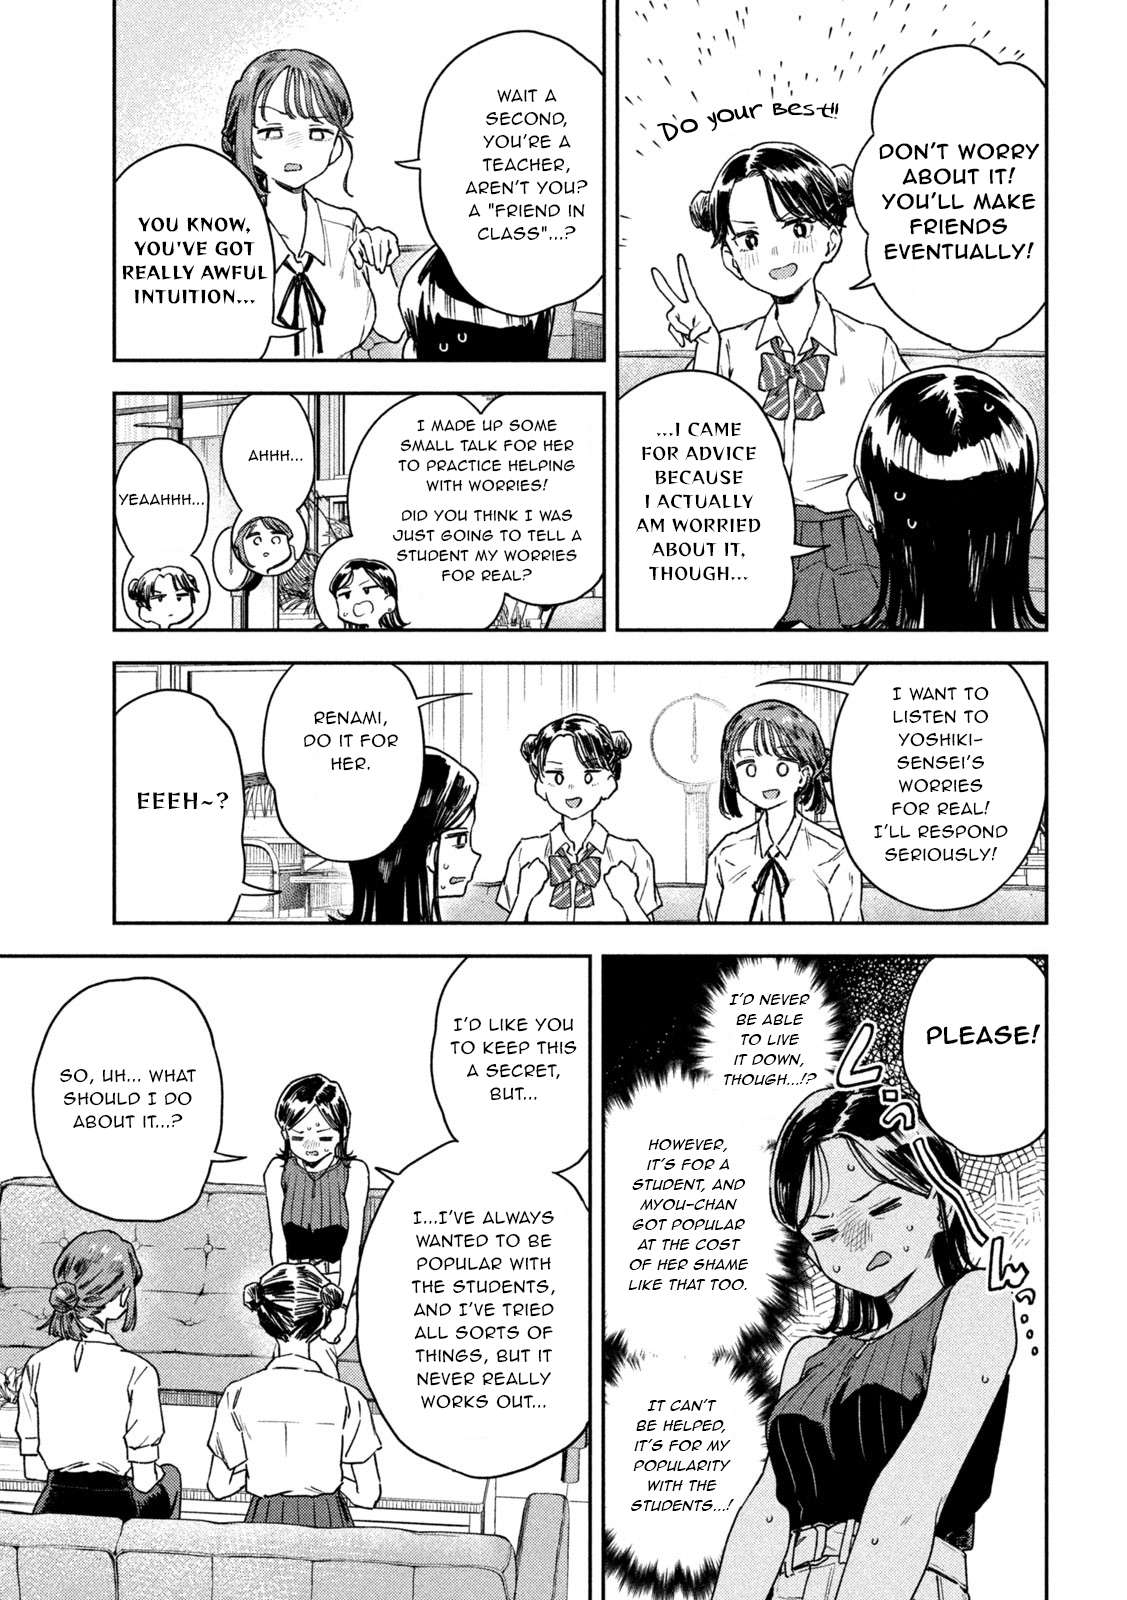 Miyo-Chan Sensei Said So - chapter 10 - #5